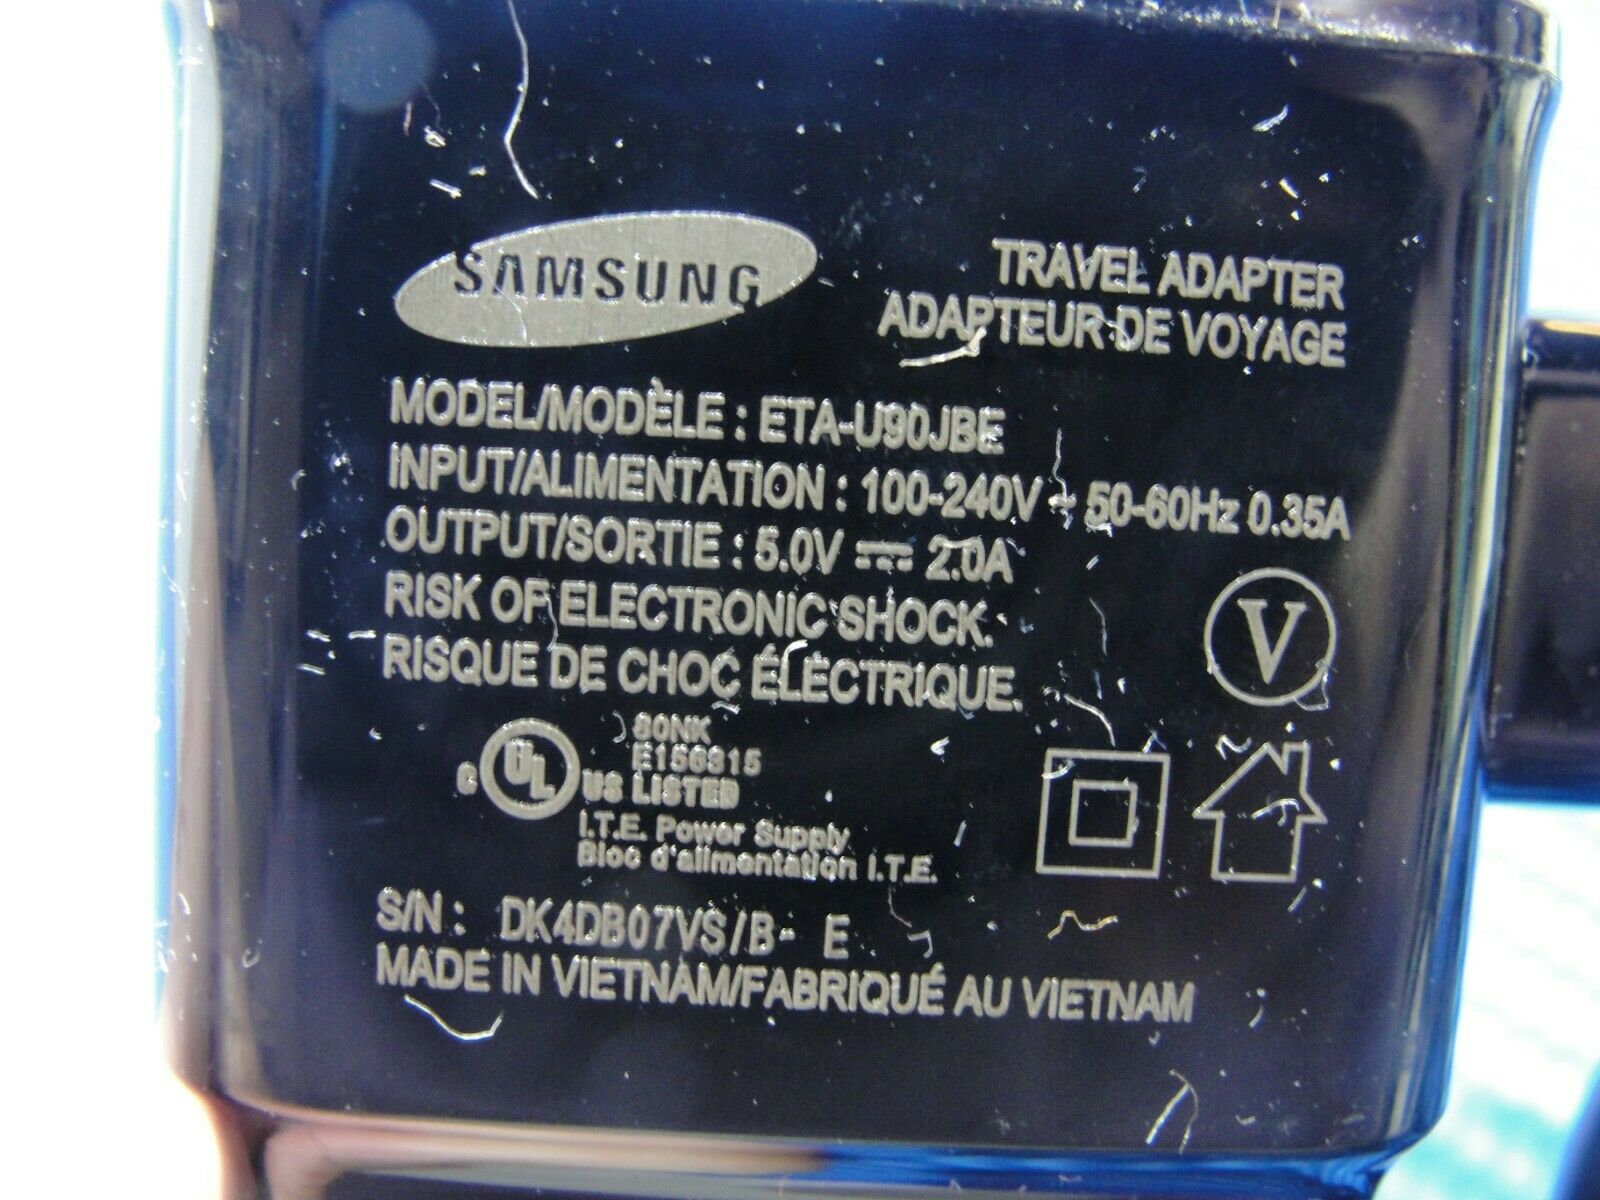 Genuine Samsung AC Adapter Power Charger 5.0V 2.0A 10W ETA-U90JBE DK4DB07VS/B - Laptop Parts - Buy Authentic Computer Parts - Top Seller Ebay